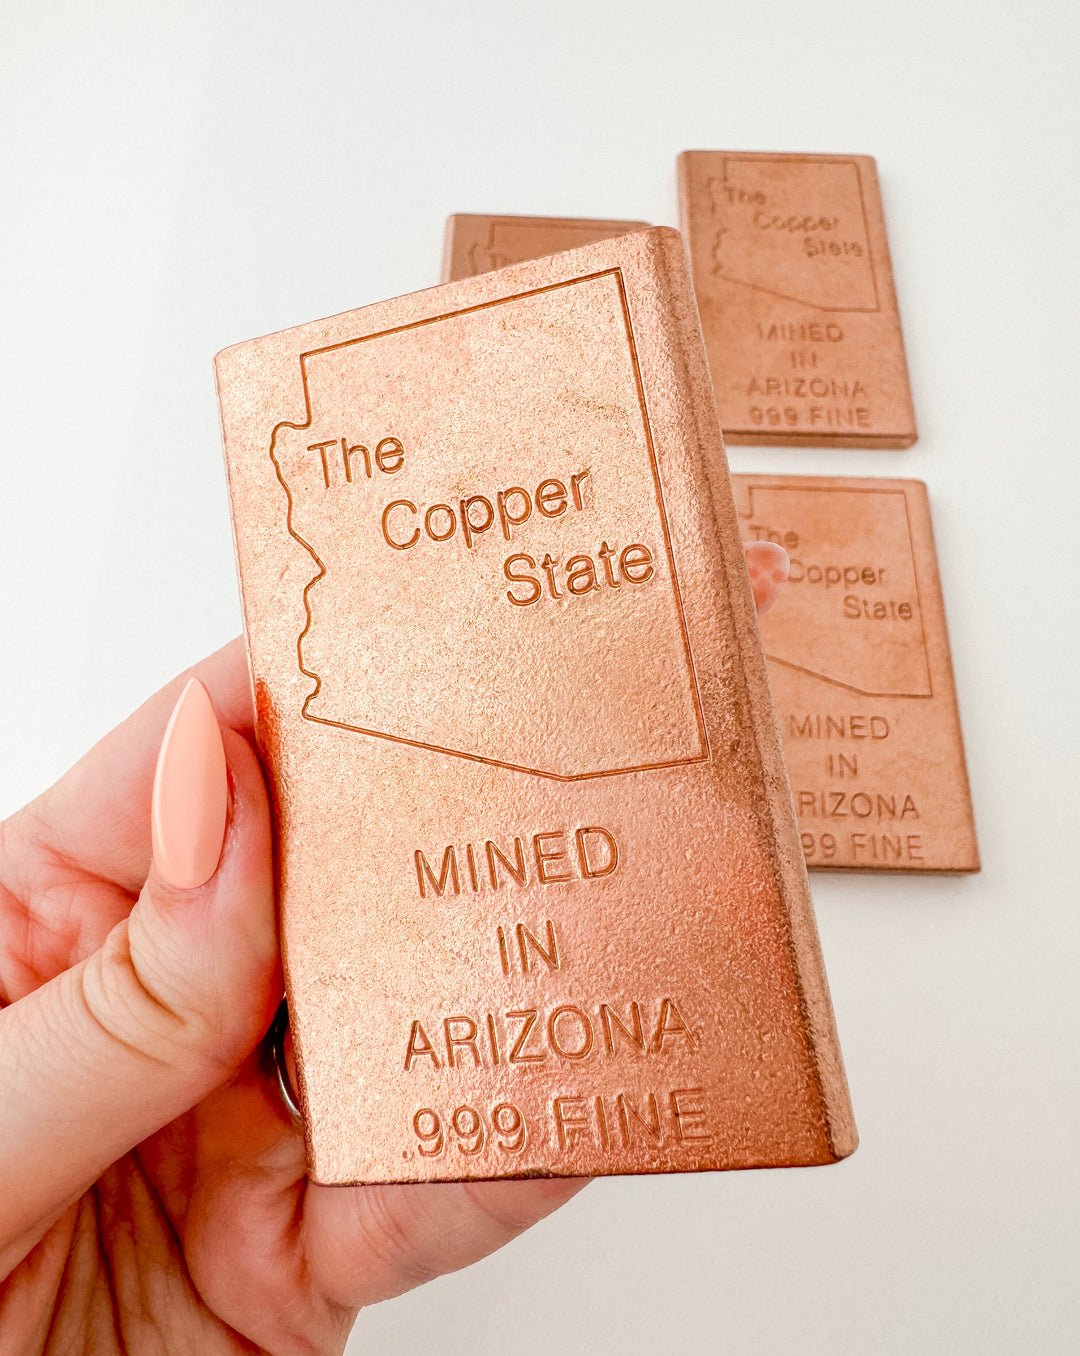 Copper Bar